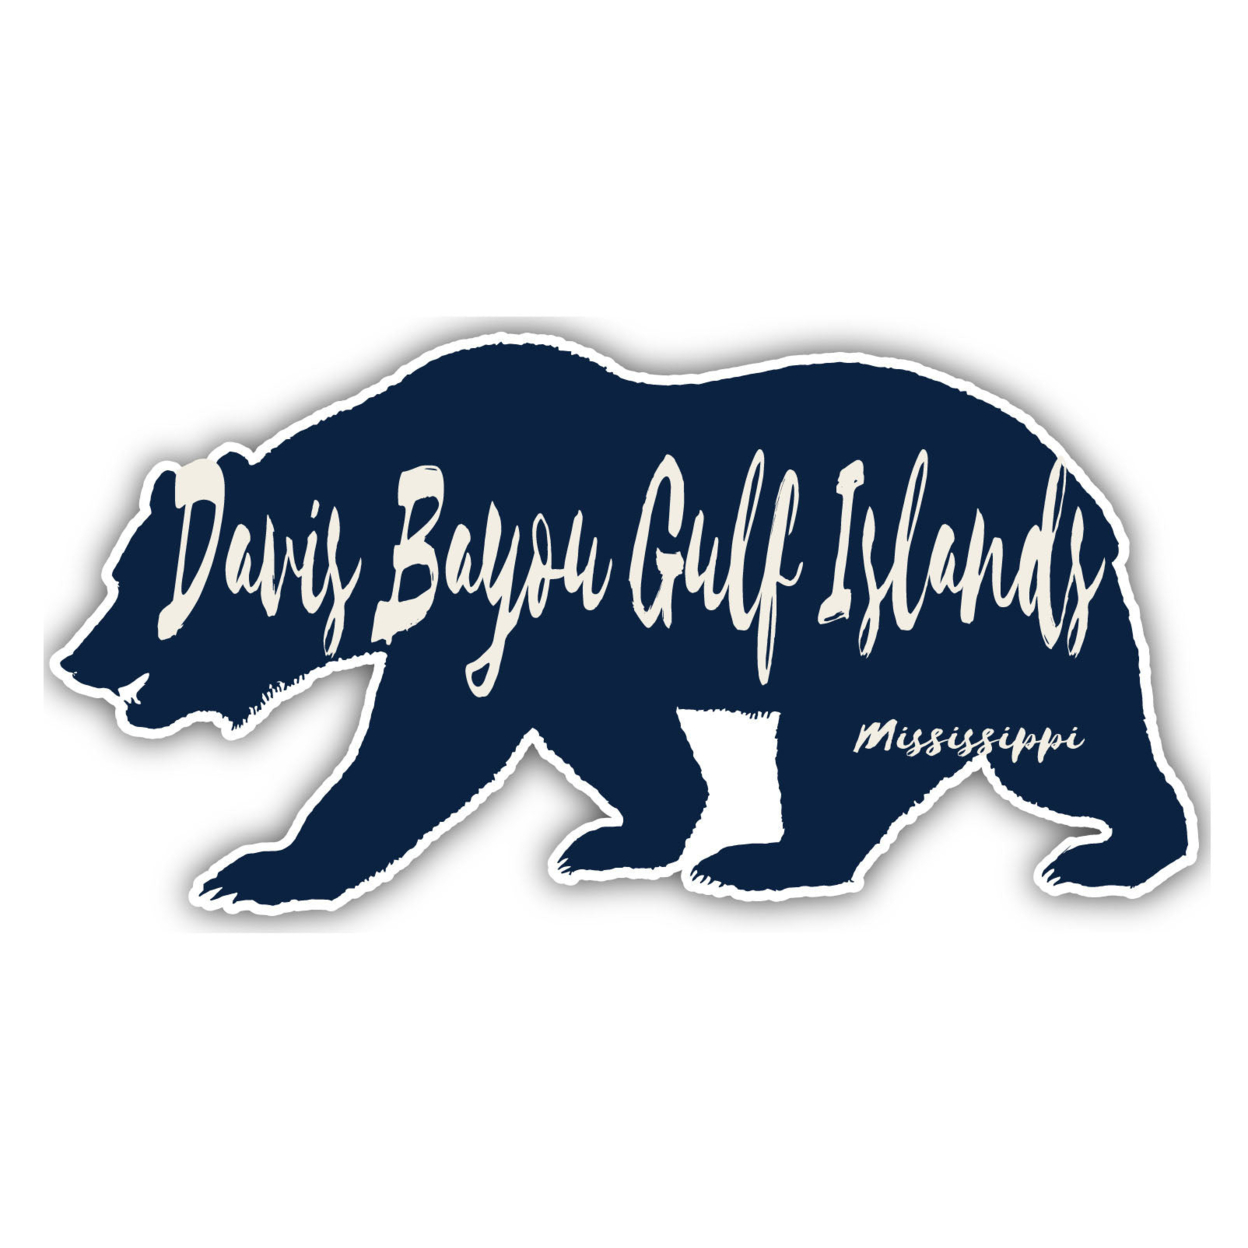 Davis Bayou Gulf Islands Mississippi Souvenir Decorative Stickers (Choose Theme And Size) - Single Unit, 10-Inch, Bear